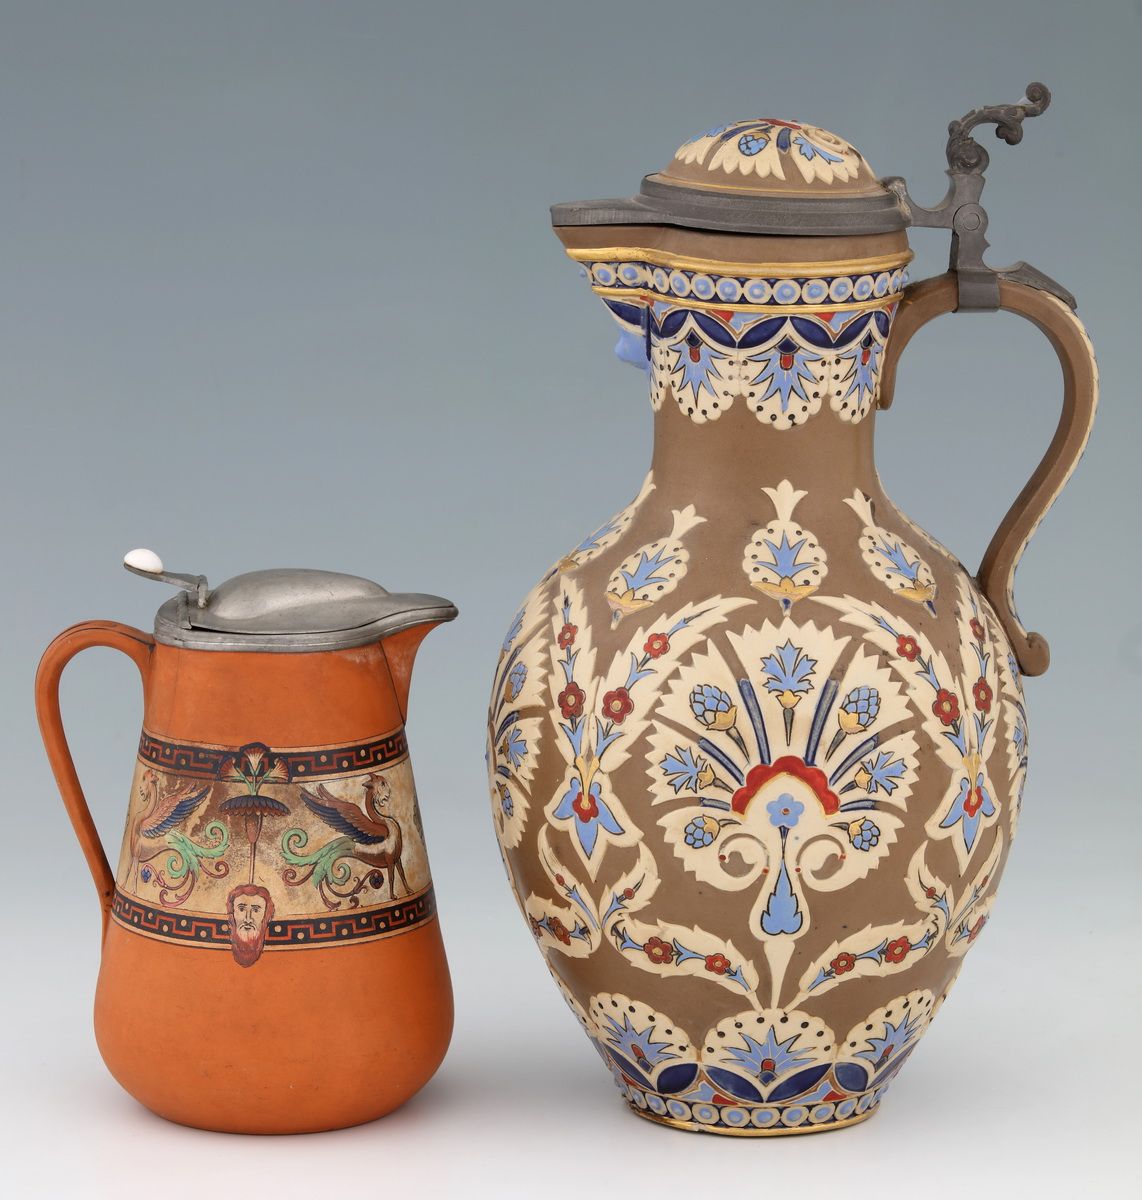 Null 英国维多利亚时期的两种尺寸的饼干瓷杯，带有多色装饰和锡制盖子
- 一个有伊特鲁里亚装饰 高 21 厘米
- 一个有伊兹尼克装饰，高 34.5 厘米
(&hellip;